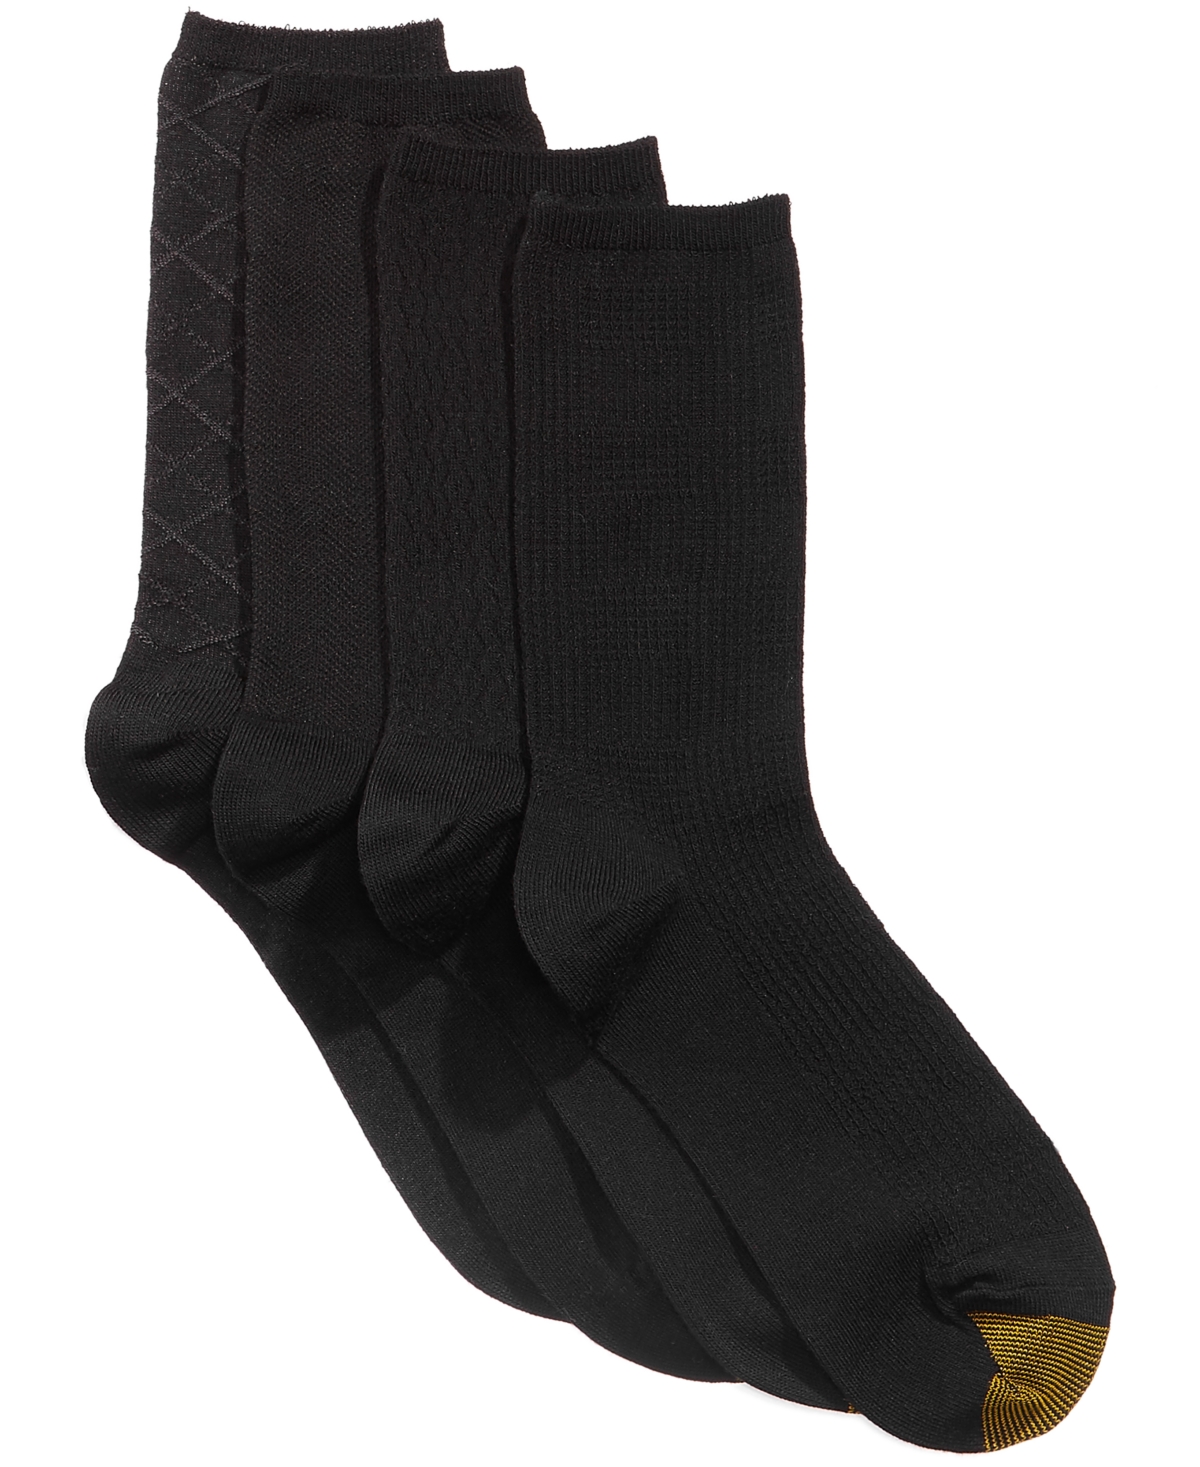 Women's 4-Pack Casual Textured Crew Socks, Created For Macys - Black